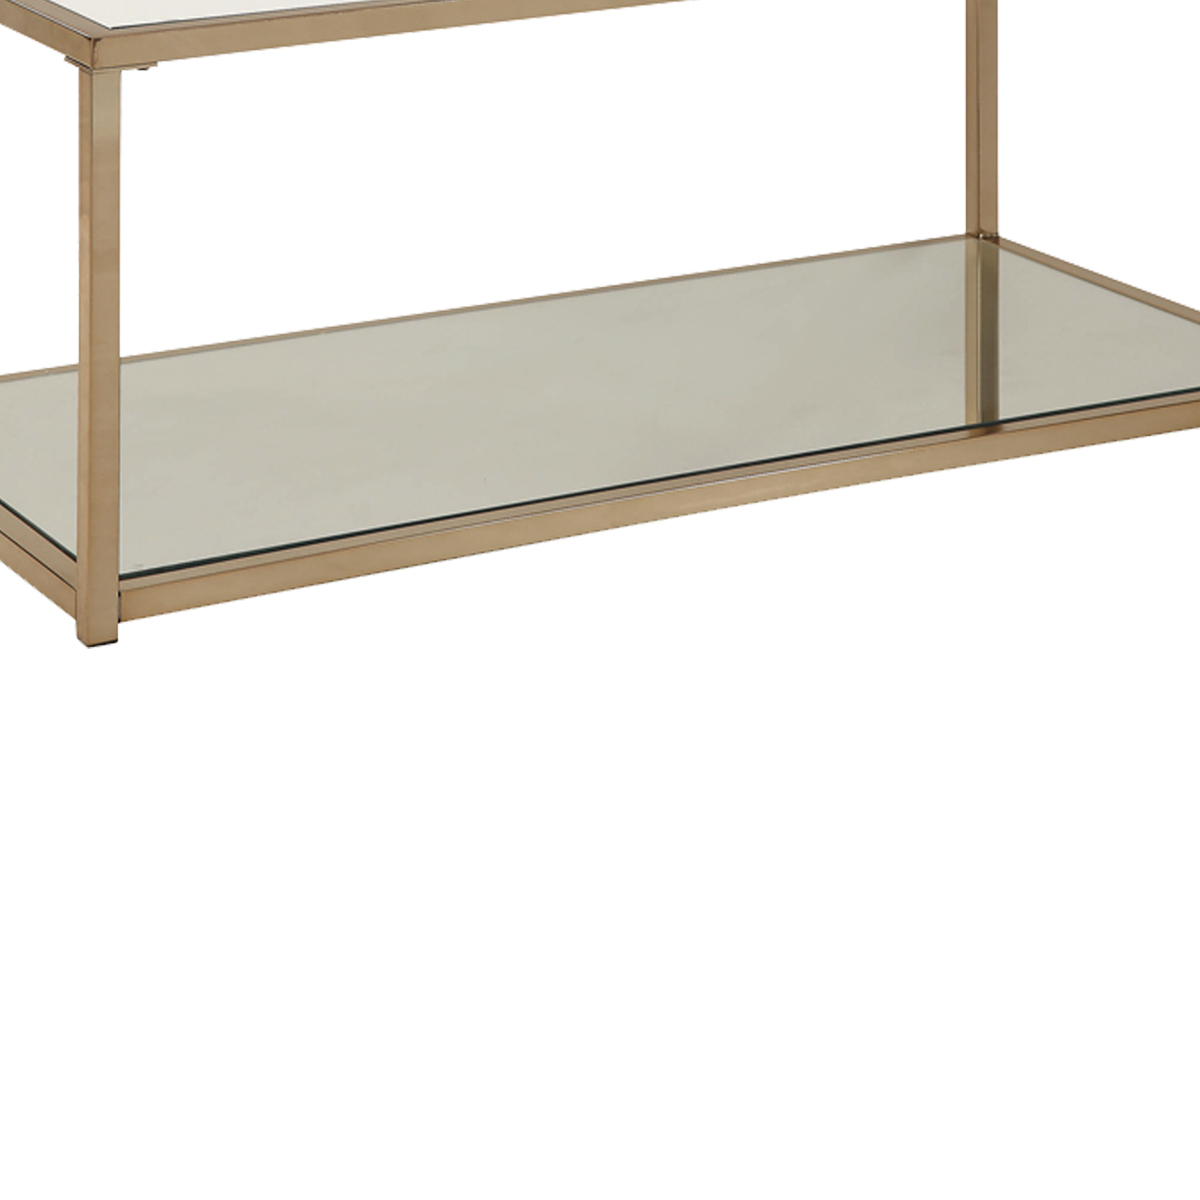 Glass Top Coffee Table With Metal Frame And Open Shelf, Brass- Saltoro Sherpi